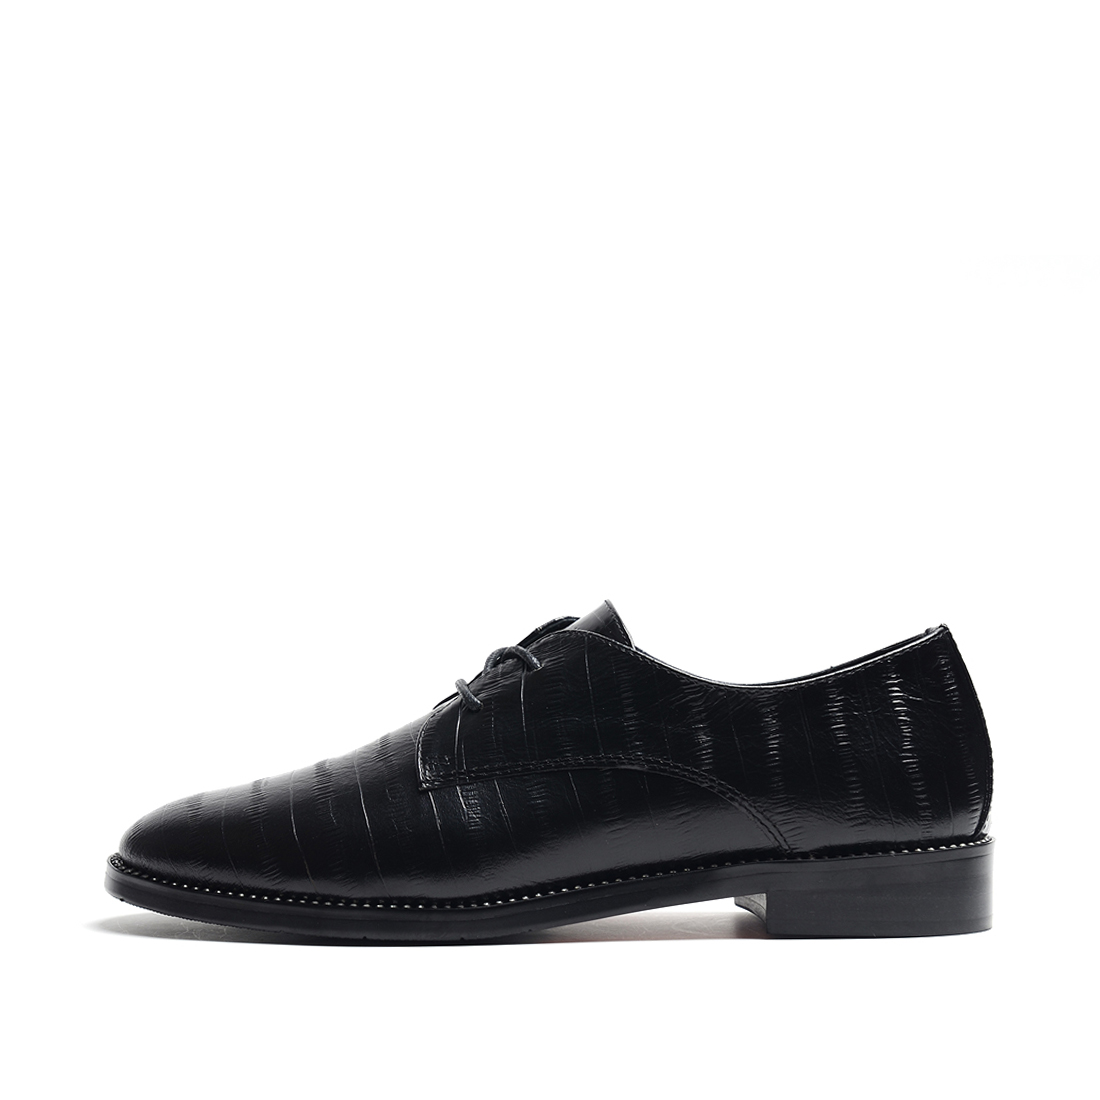 [RedLoafer]欧美风水钻羊皮革单鞋(尺码标准)
编号：A3856D1A76